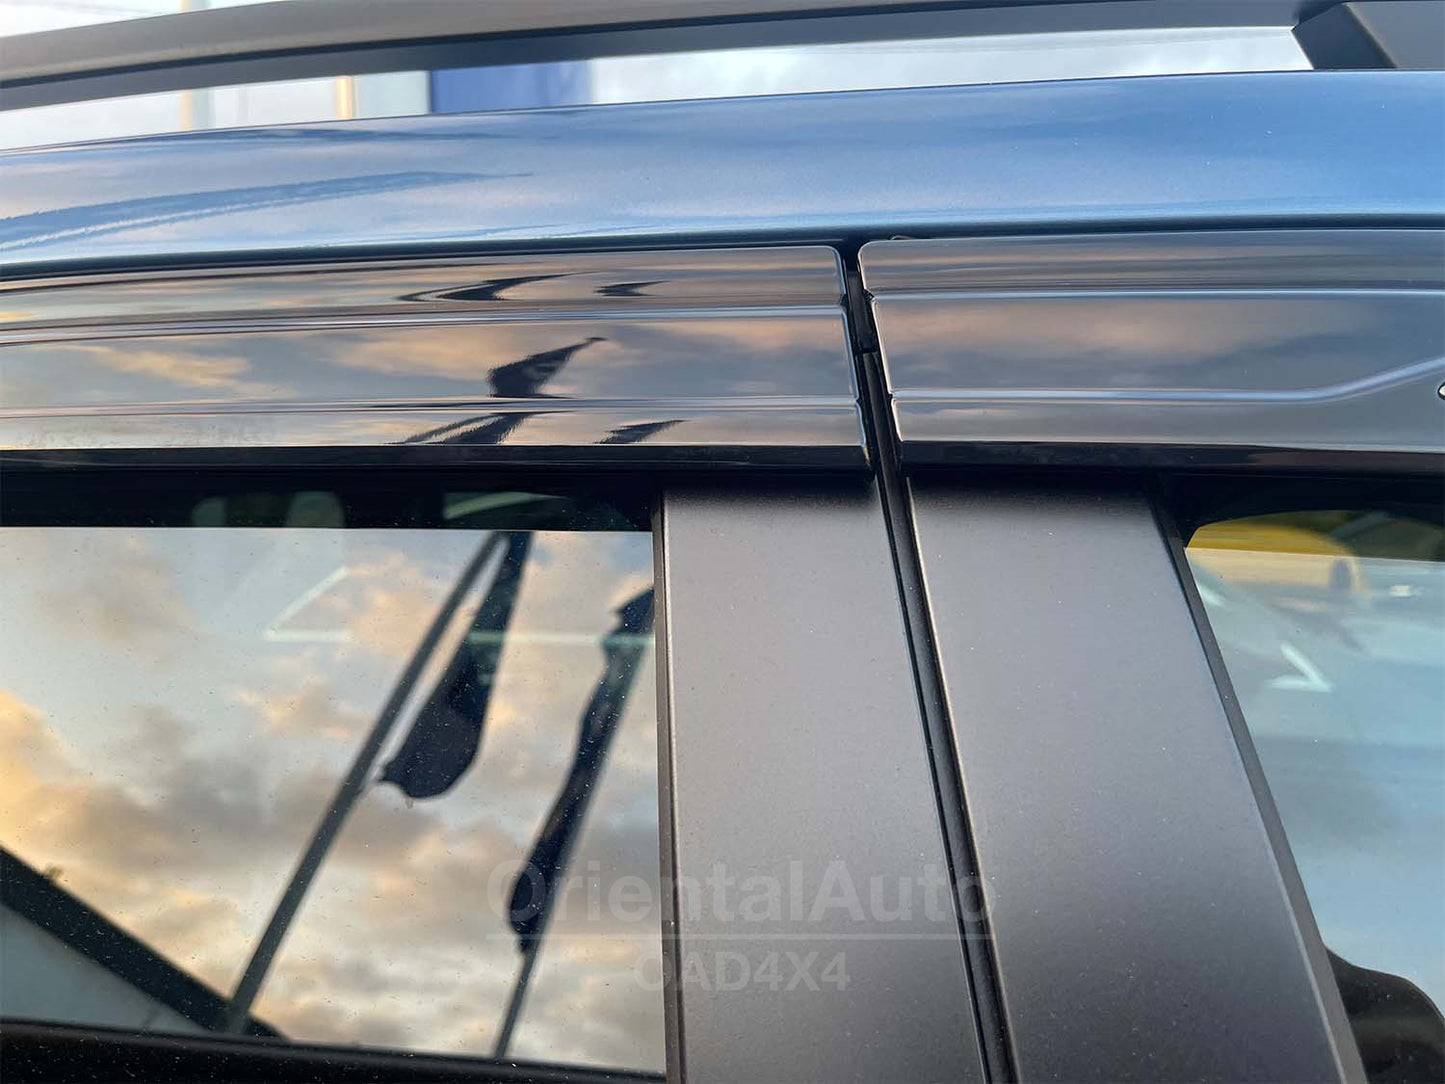 Injection 6pcs Weathershields for Subaru Forester S5 2018+ Weather Shields Window Visor